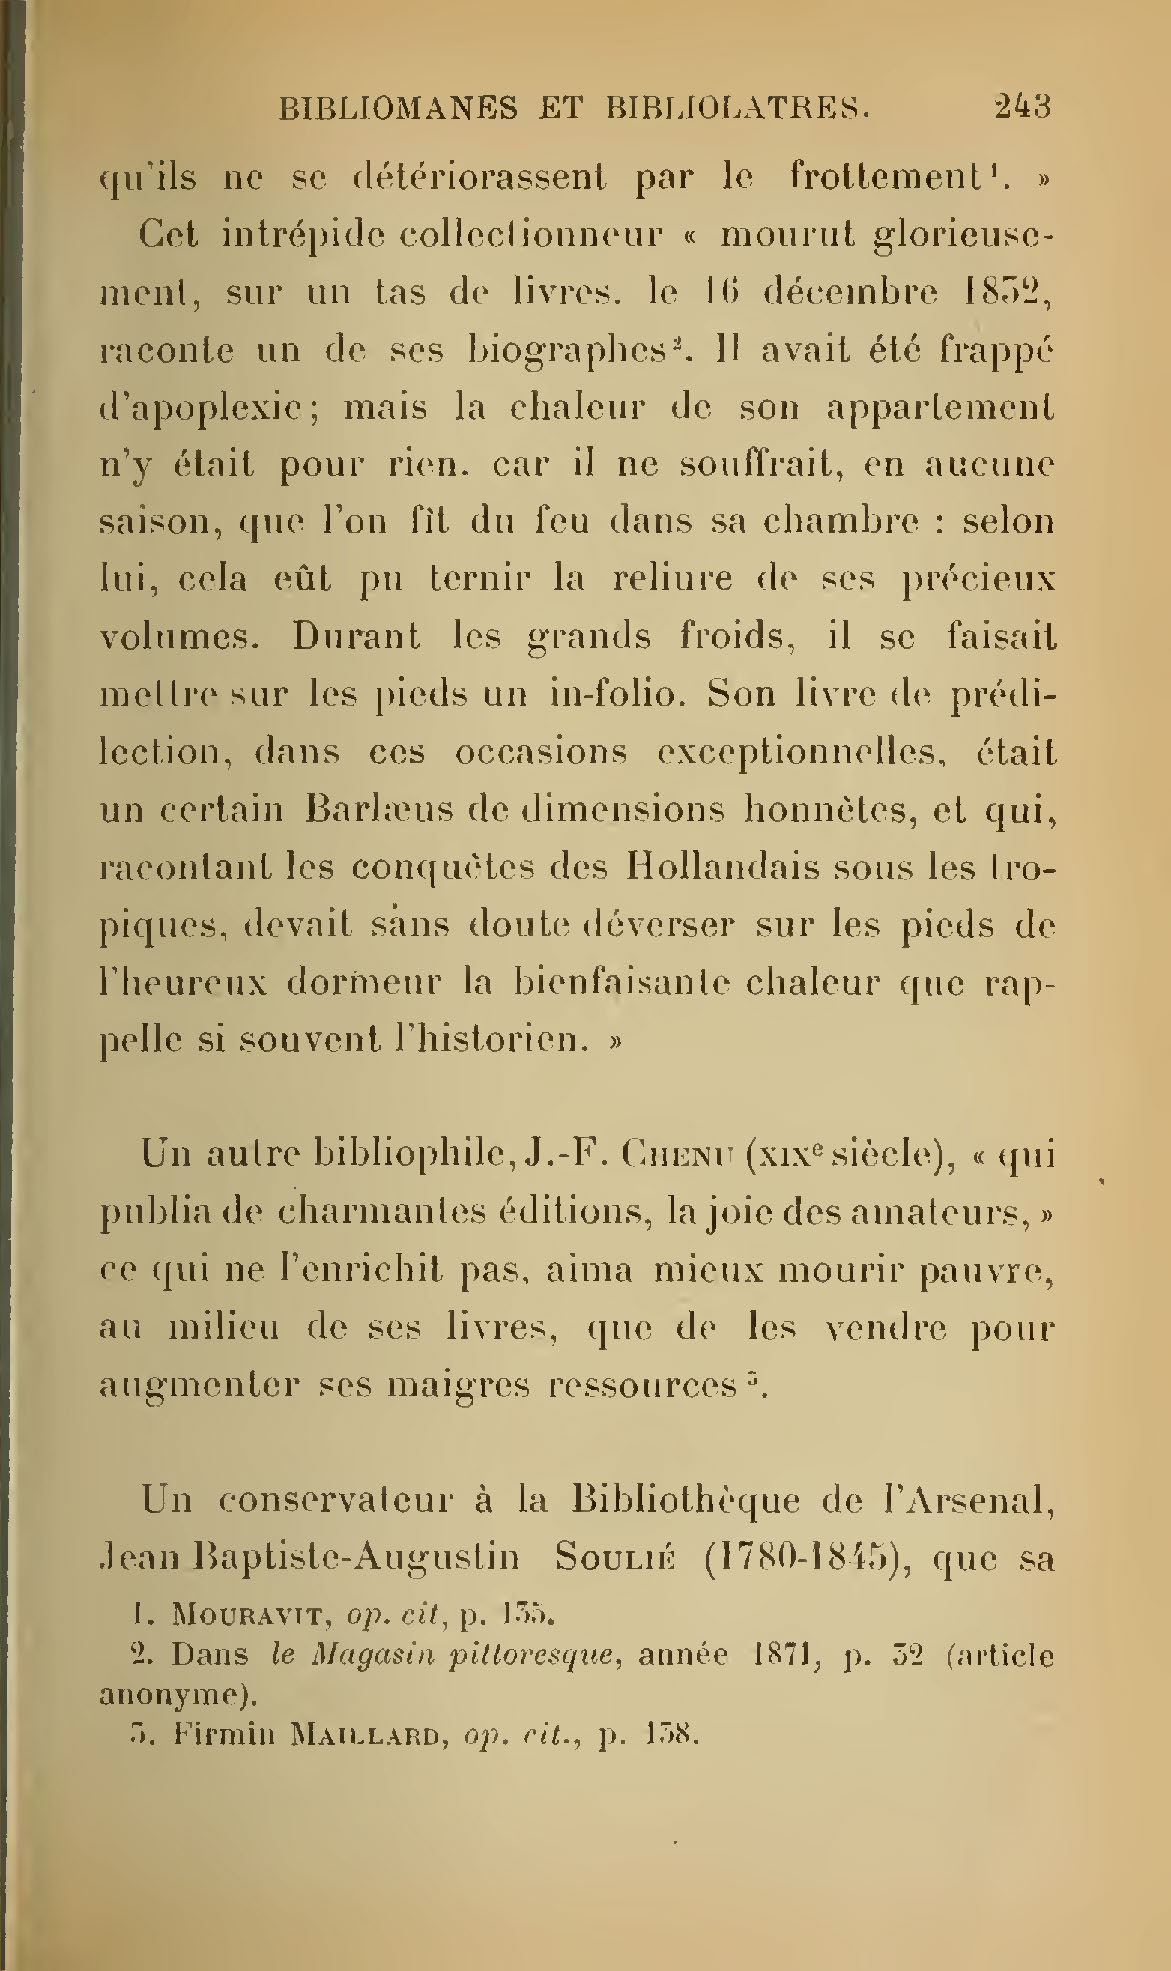 Albert Cim, Le Livre, t. II, p. 243.